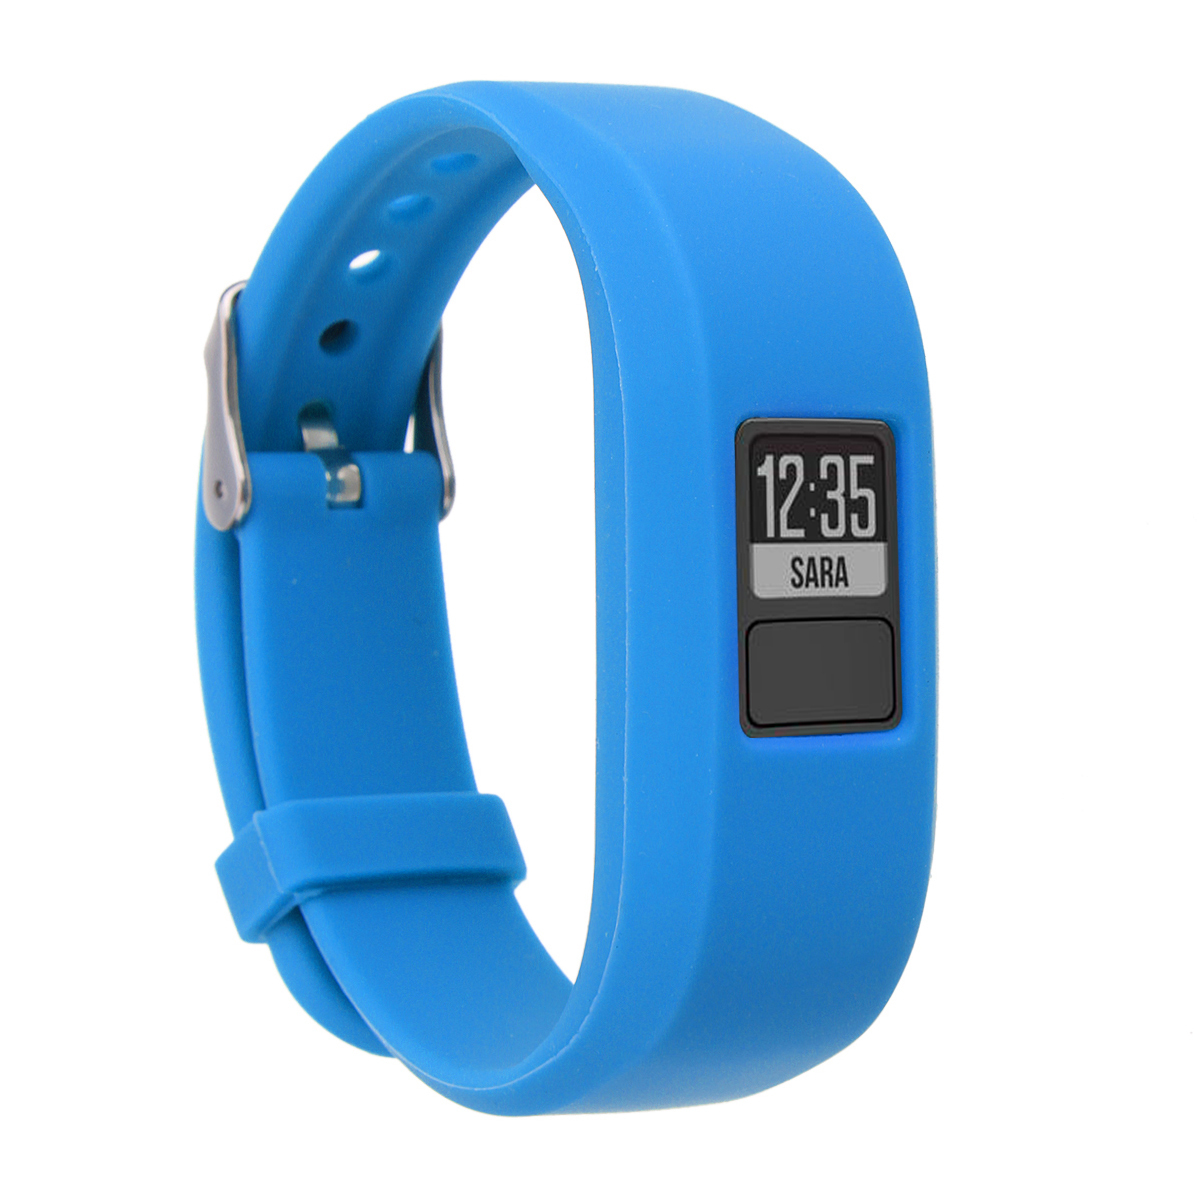 Sports Silicone Watch Band Replacement Wrist Strap For Garmin Vivofit JR Tracker Bracelet 1